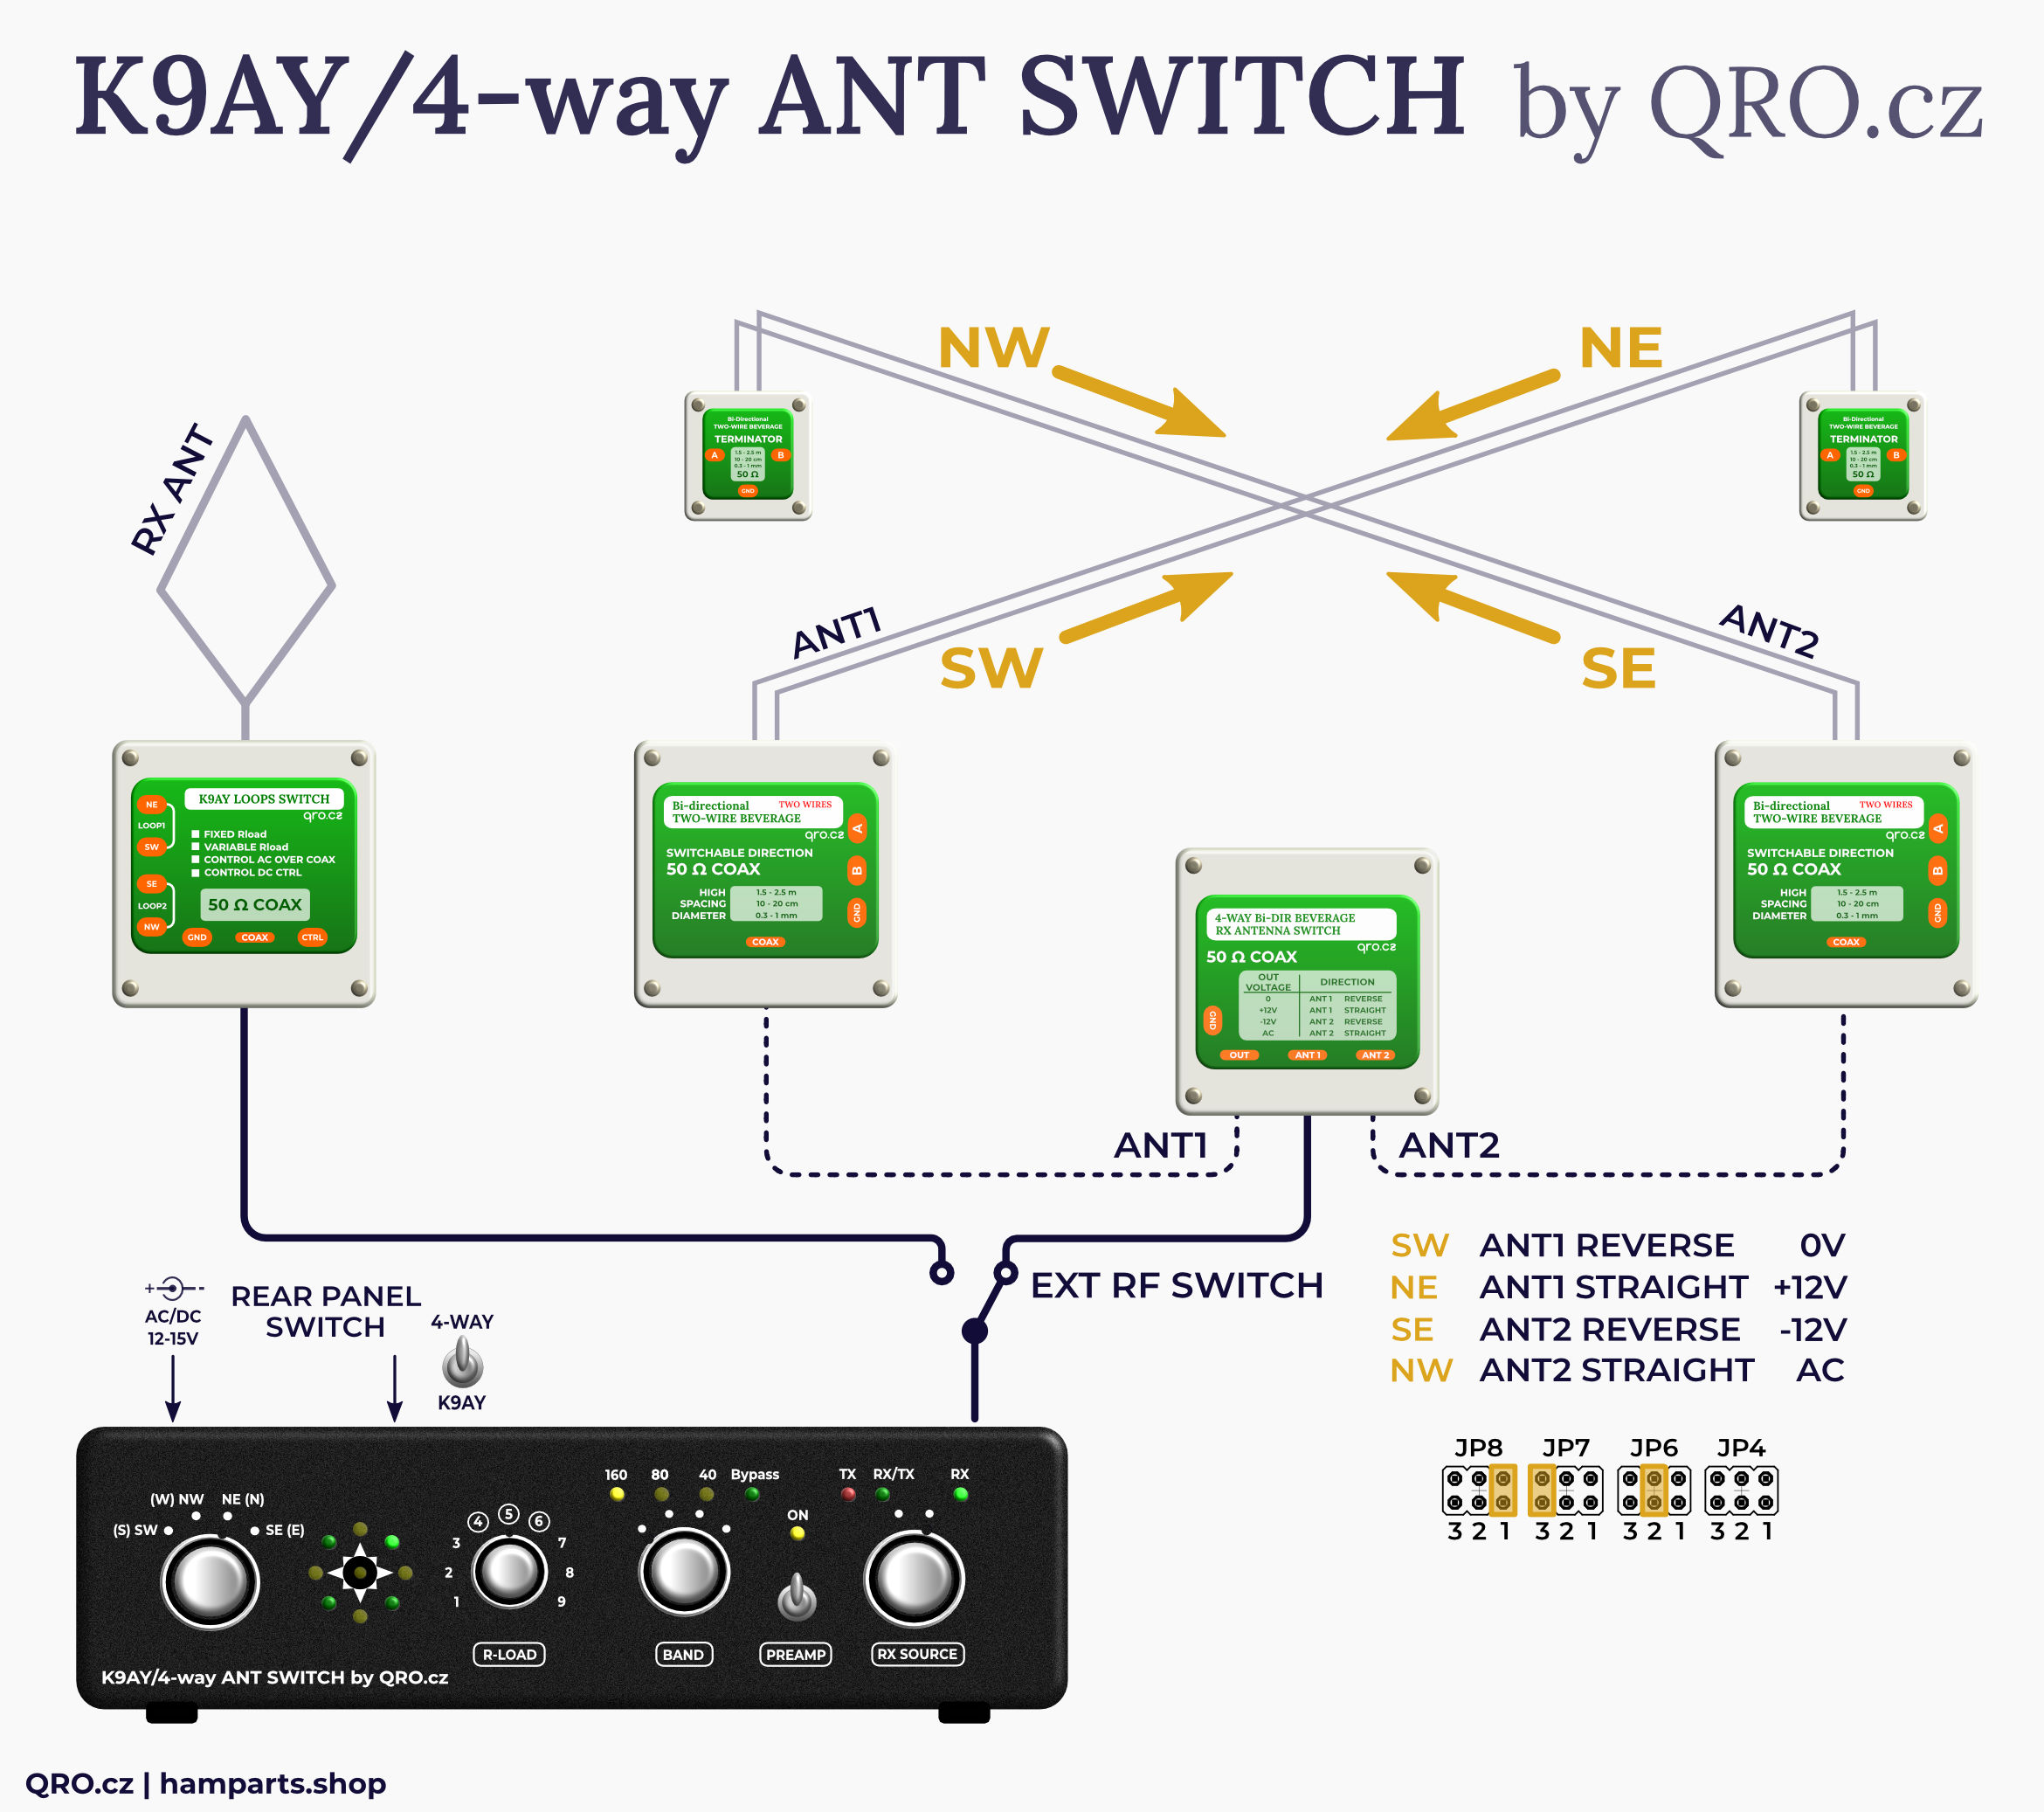 k9ay/4-way antenna switch controller qro.cz hamparts.shop